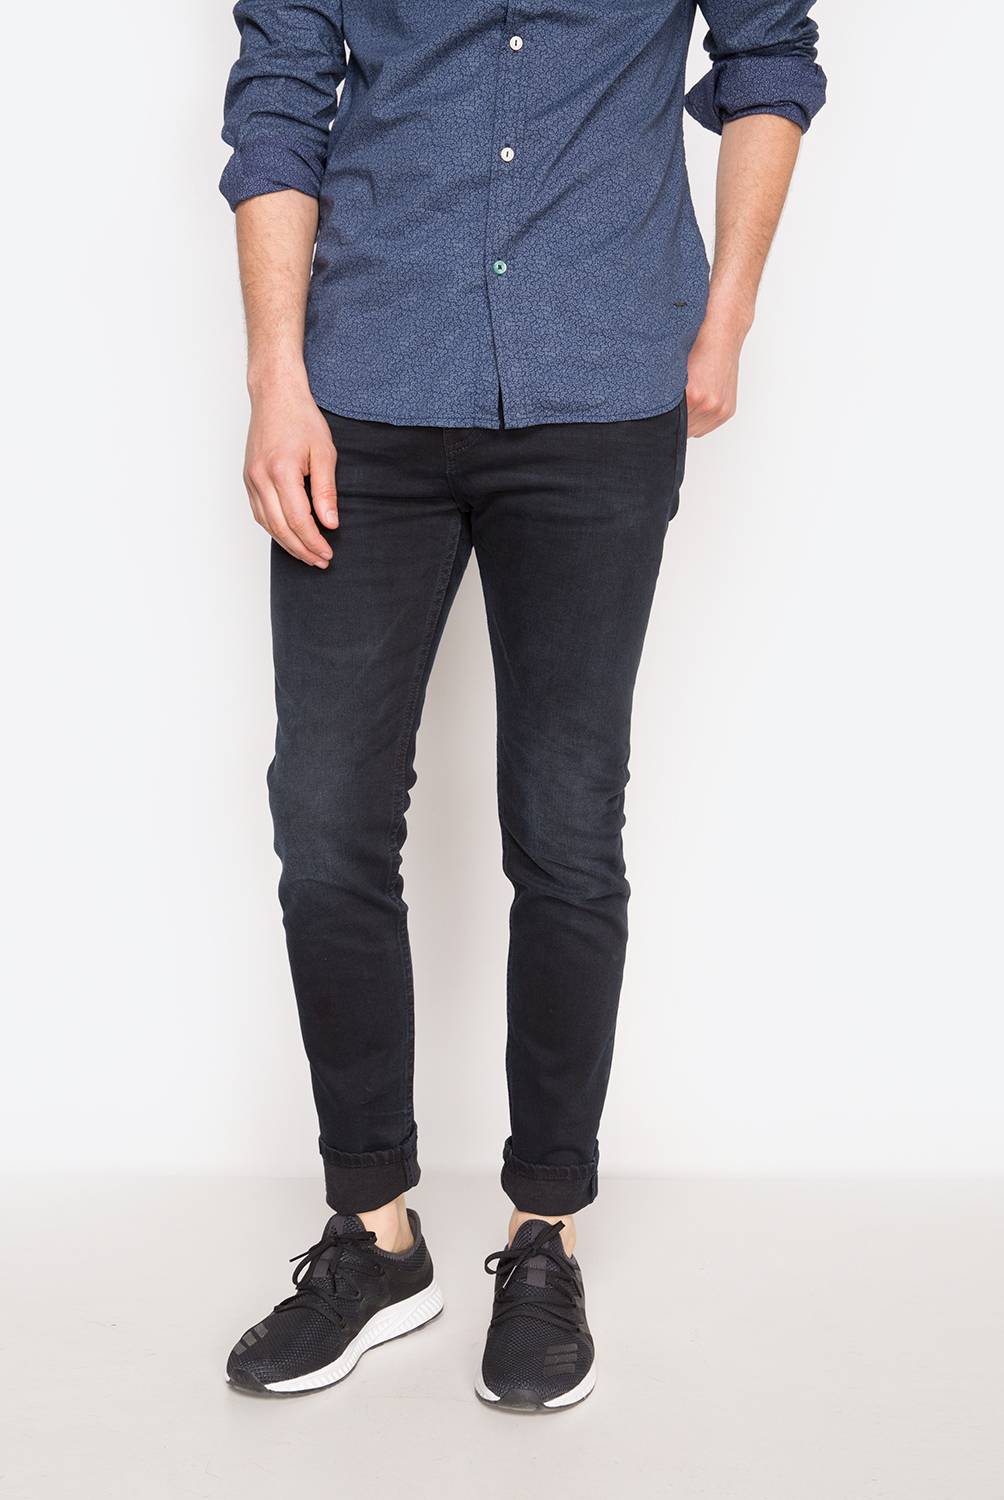 Levis - Jeans Casual Slim Fit